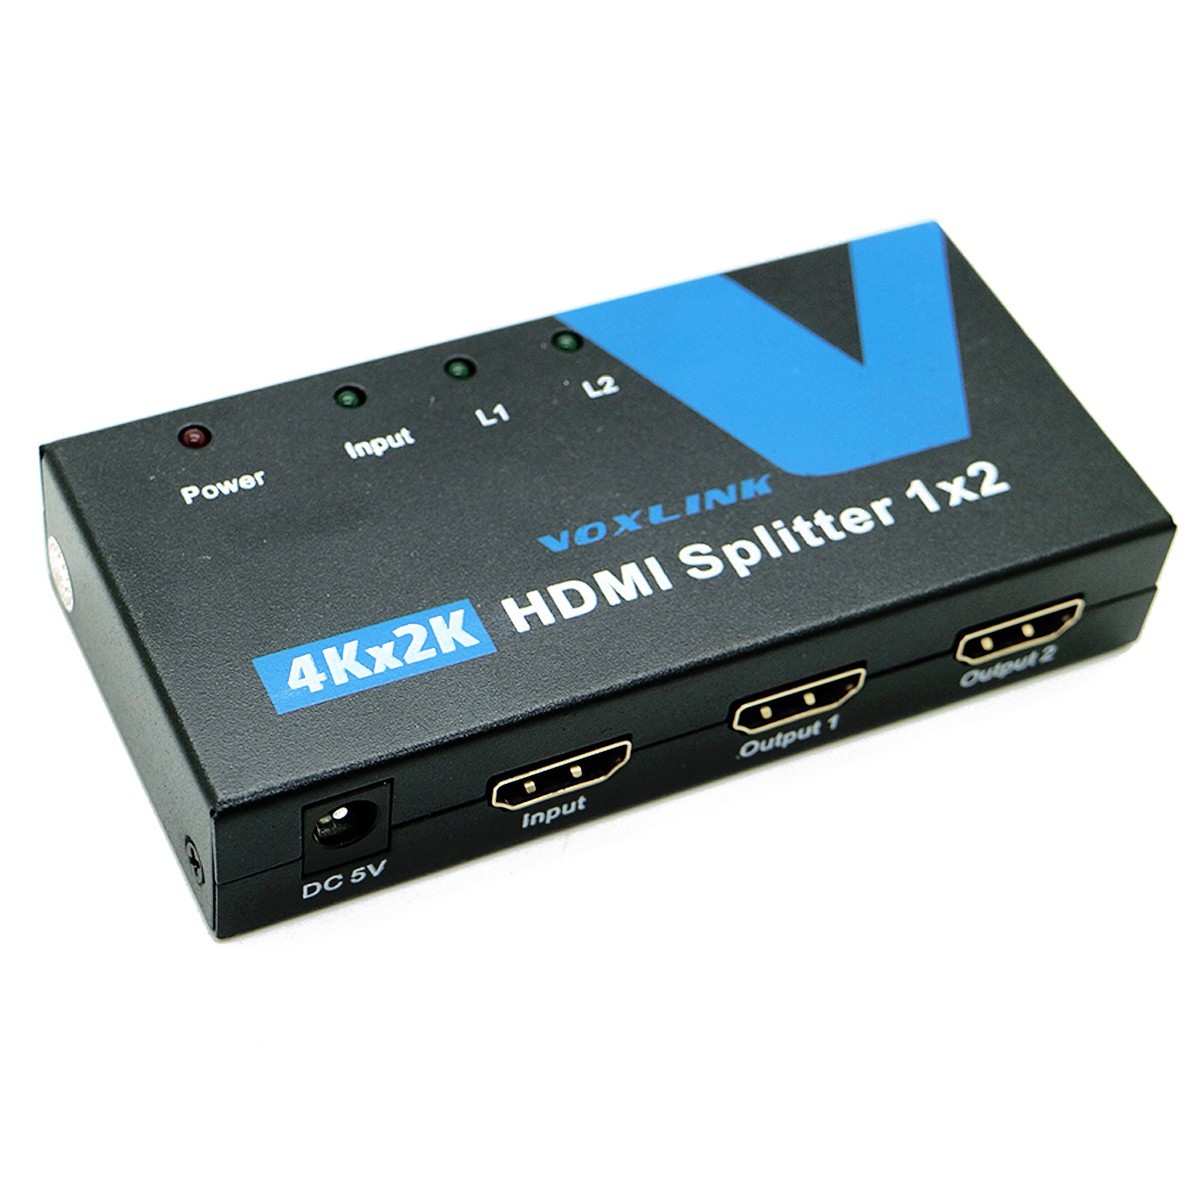 Voxlink HDMI Splitter 1x2 Support 3D Ultra-HD Resolution 4KX2K 1 in 2 out HDMI 4K Video Splitter